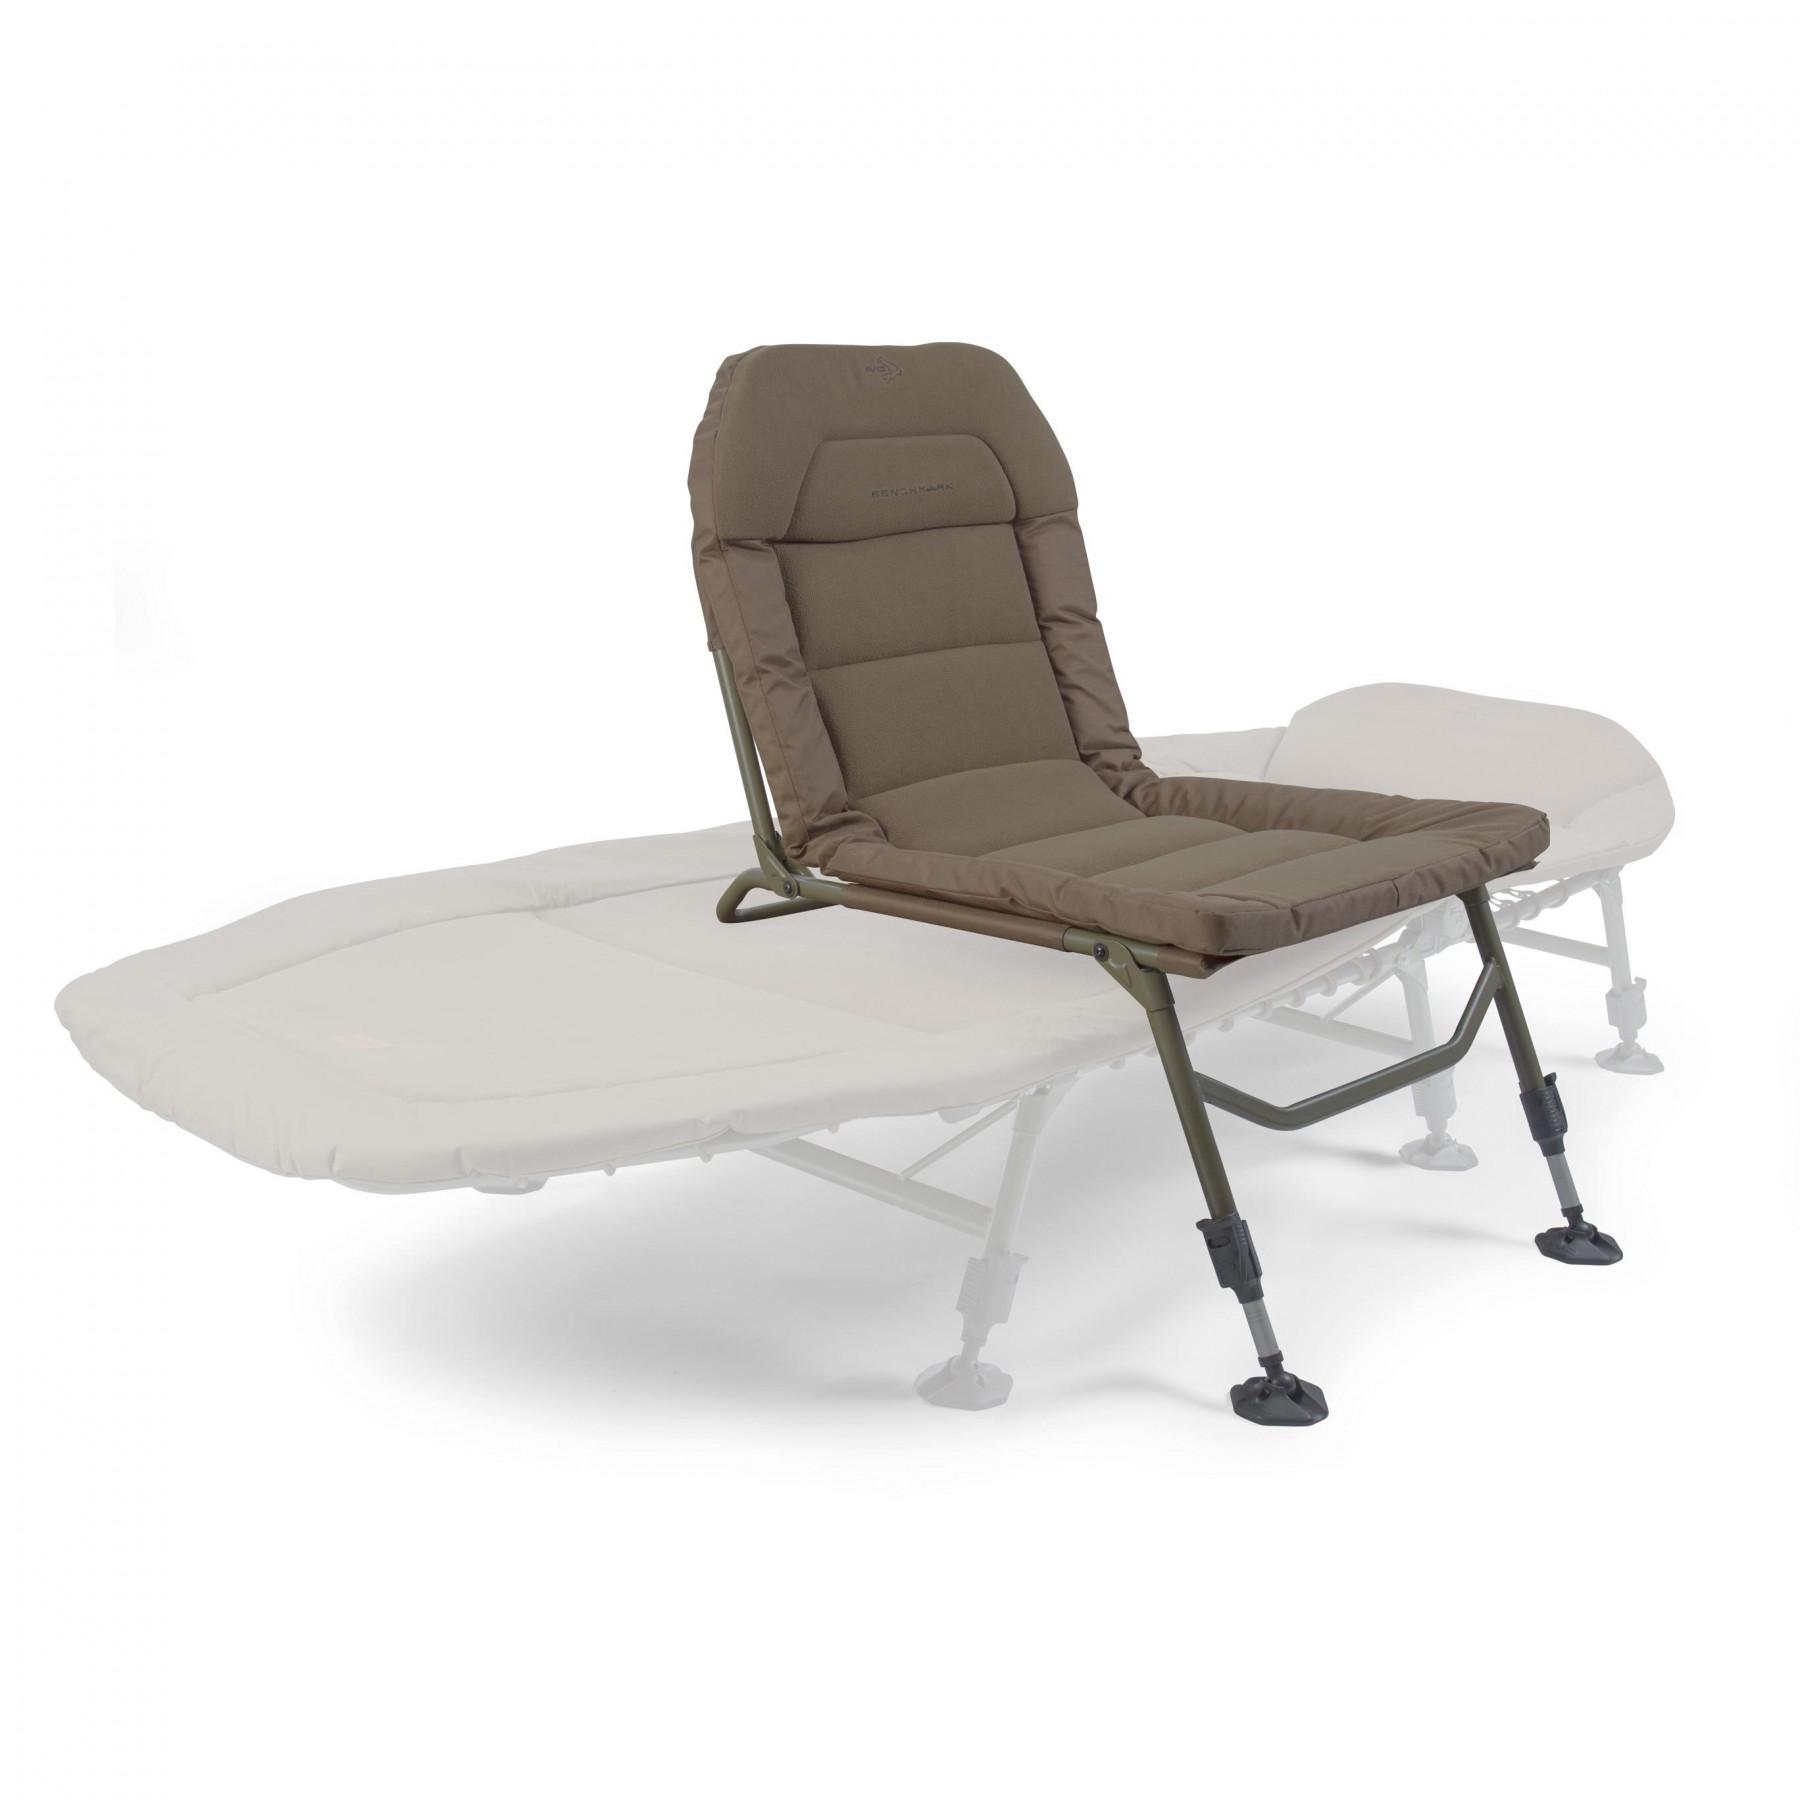 Cadeira Avid Carp Benchmark Memory Foam Multi Chair